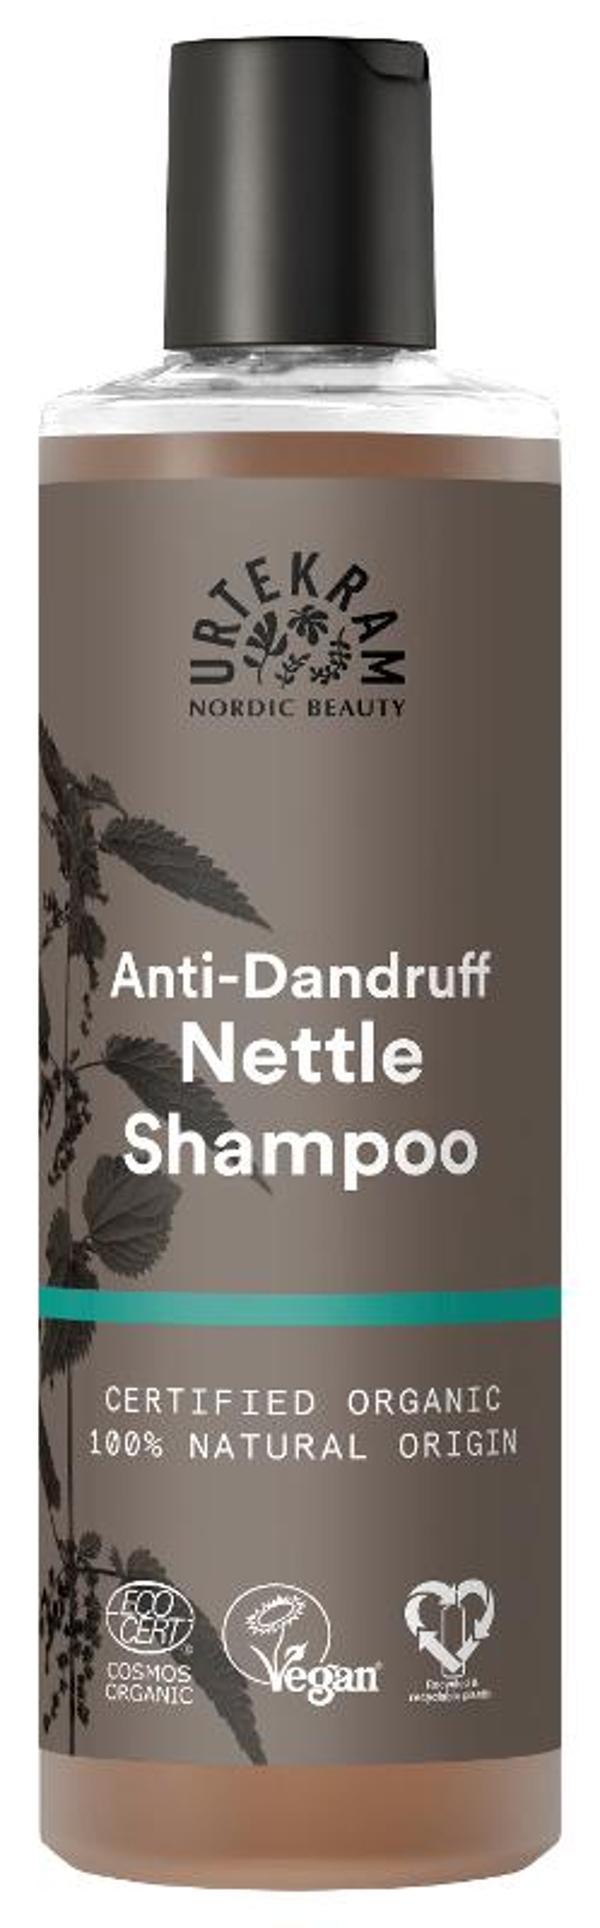 Produktfoto zu Brennnessel Anti-Schuppen-Shampoo 250ml